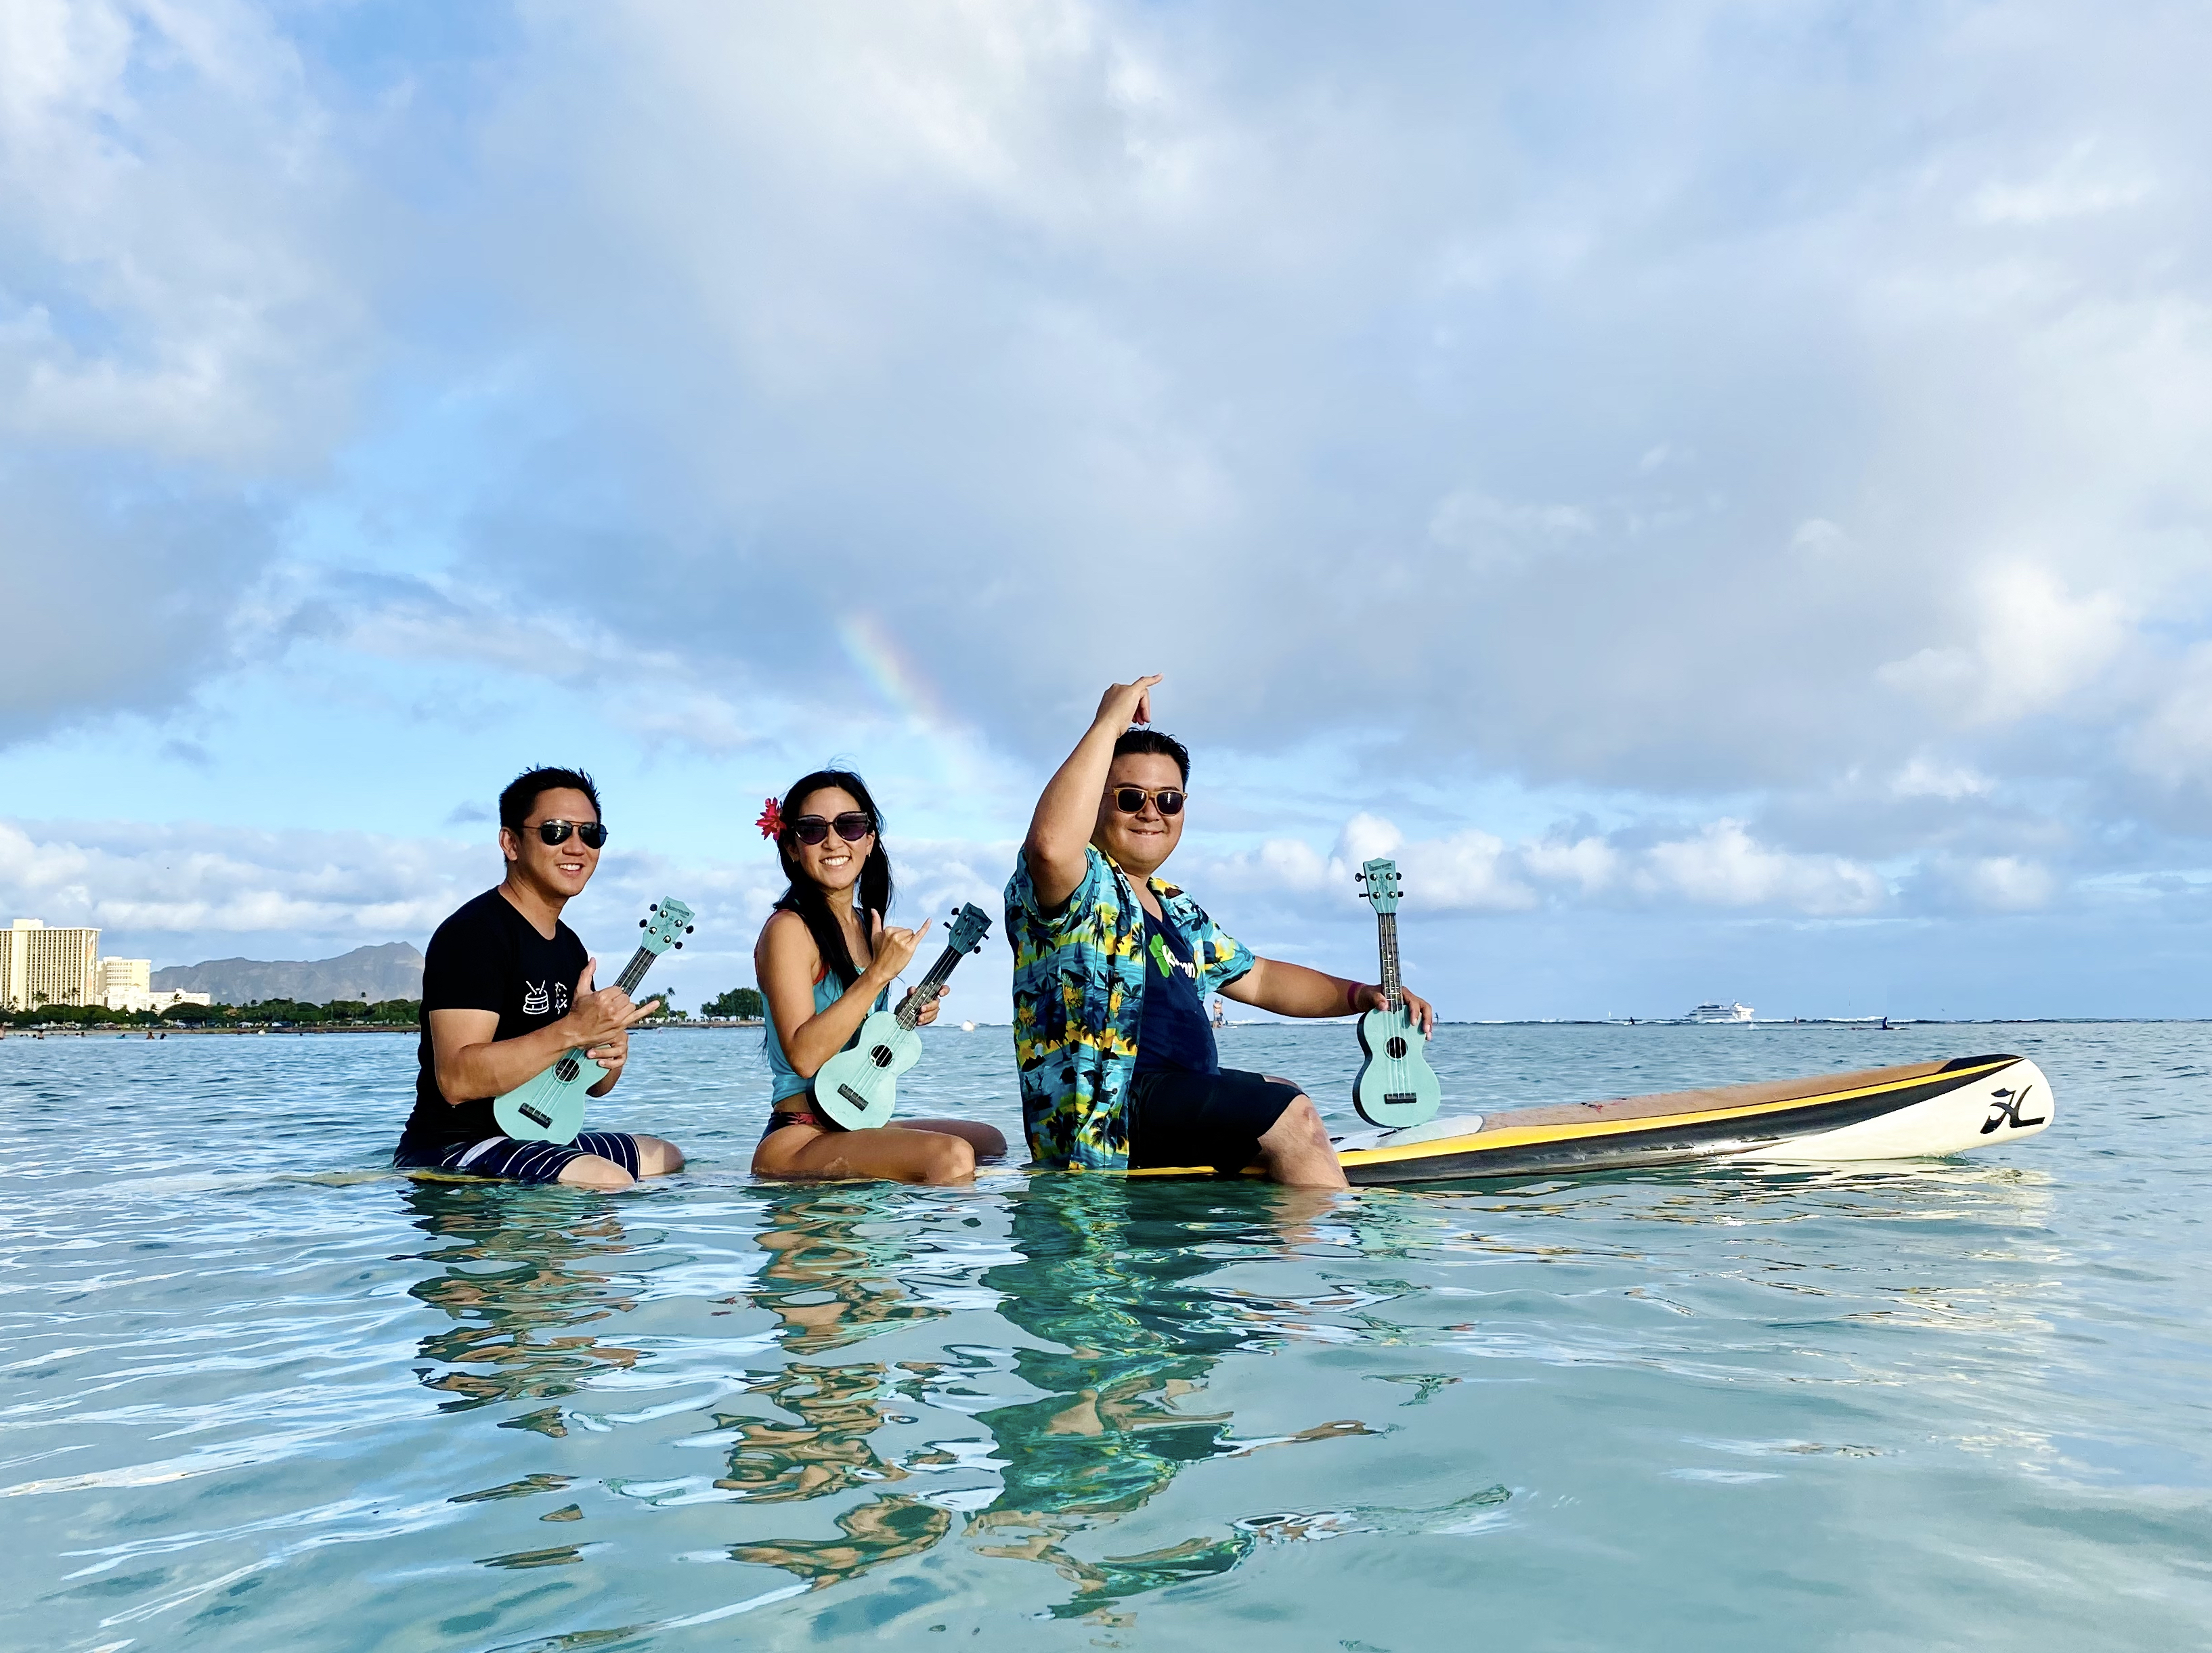 U3, Cynthia Lin, Abe Lagrimas Jr, Ukulenny rowing on the ocean in Hawaii with ukuleles